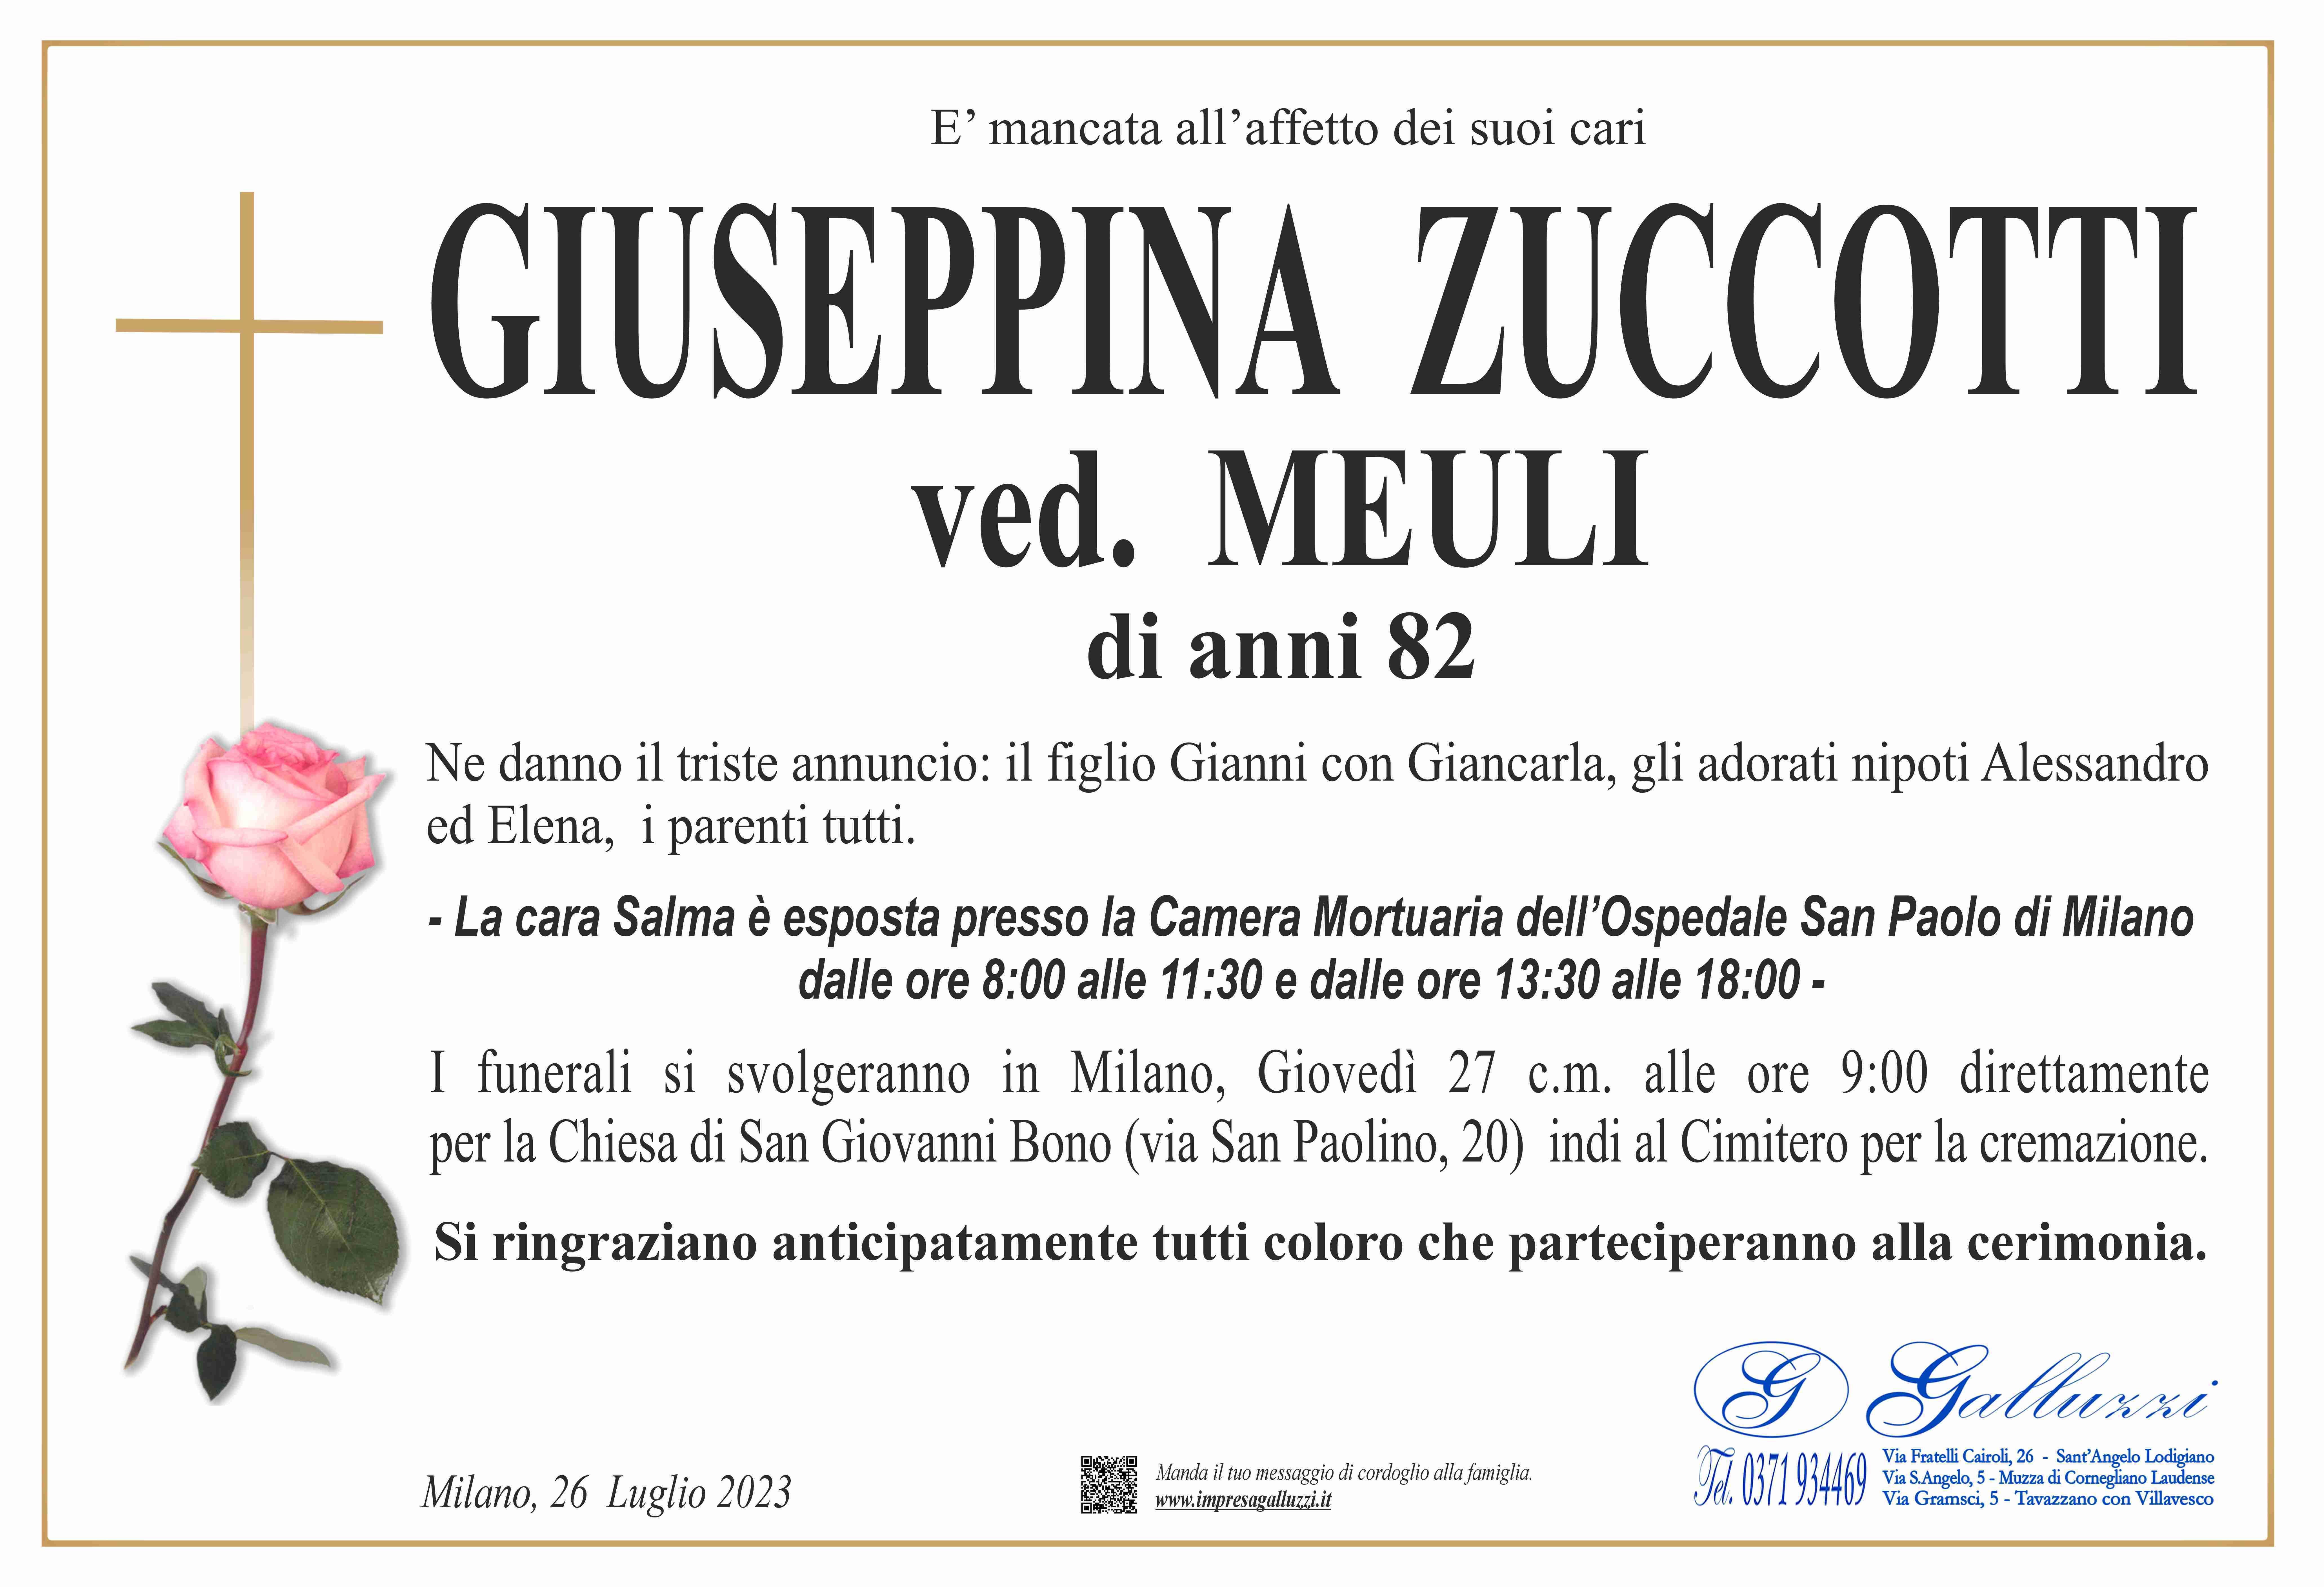 Giuseppina Zuccotti